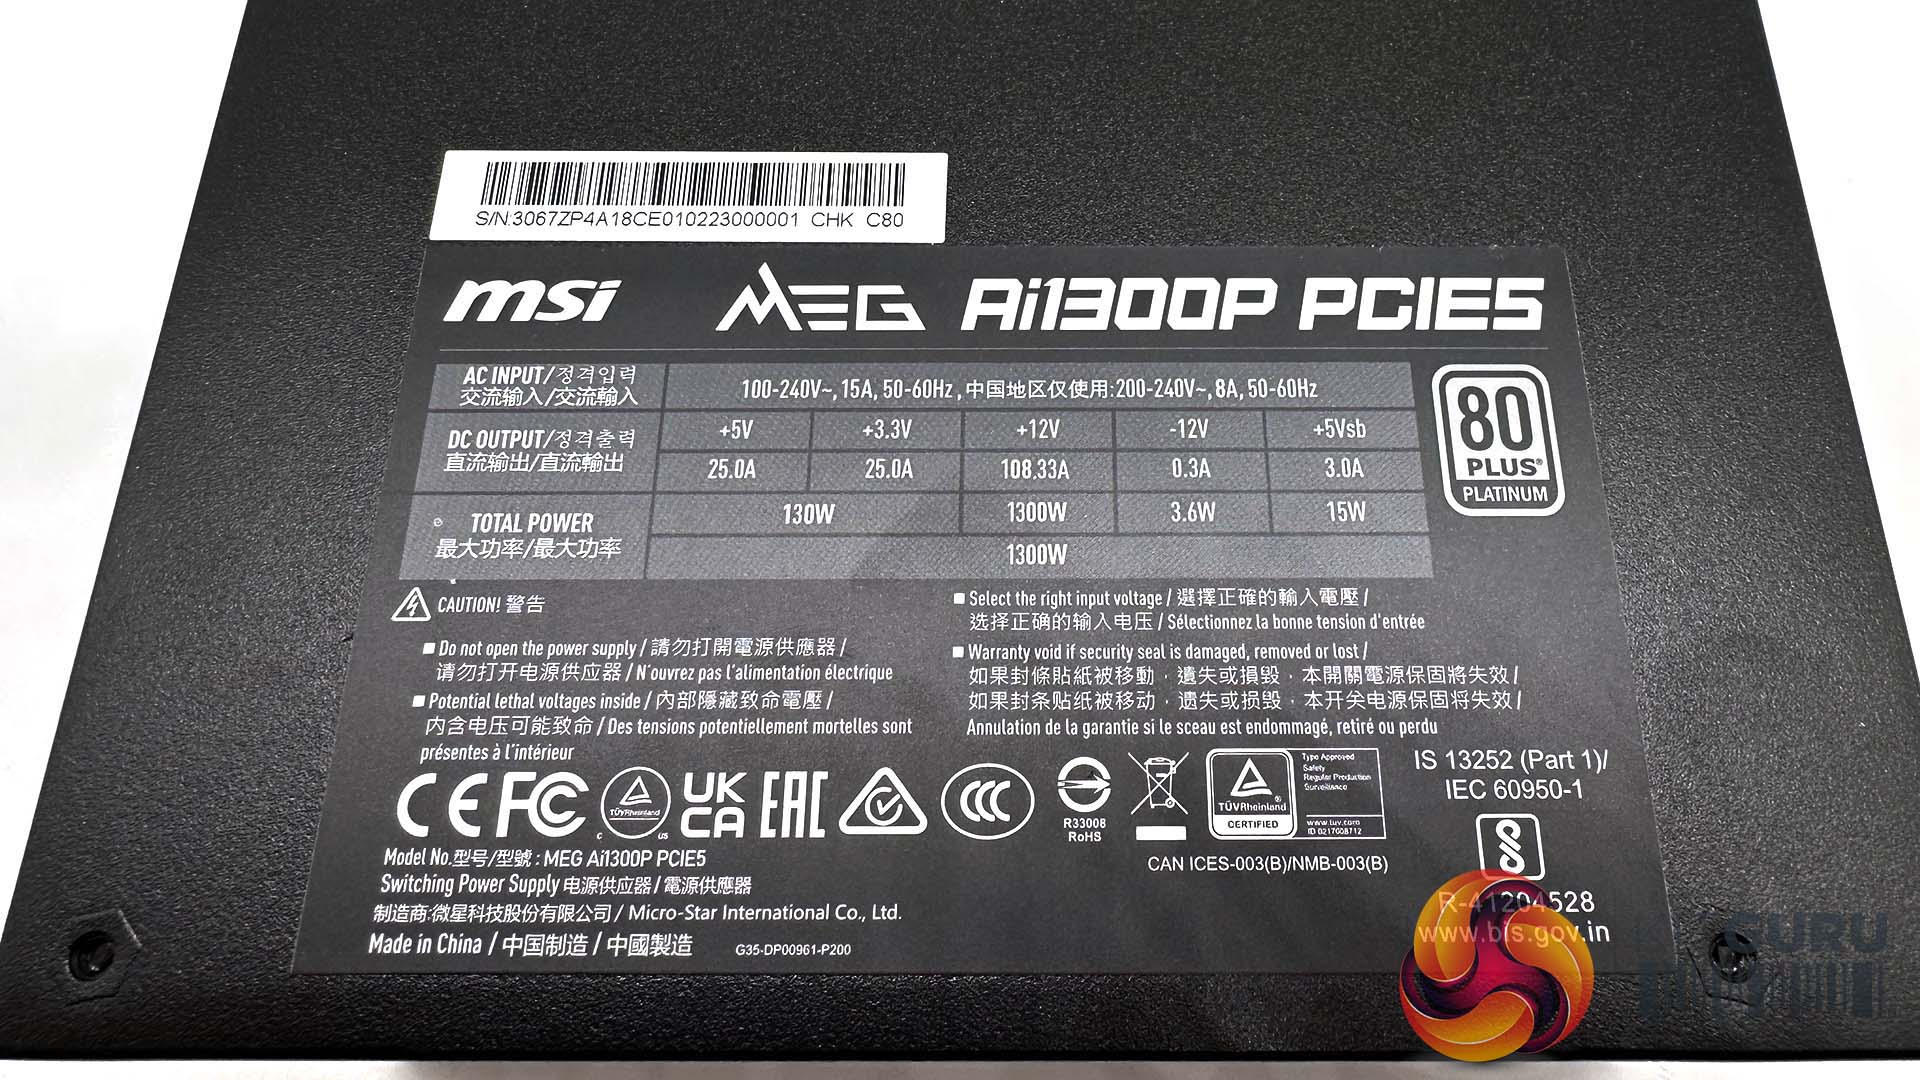 MSI MEG Ai1300P PCIE5 Power Supply Review | KitGuru